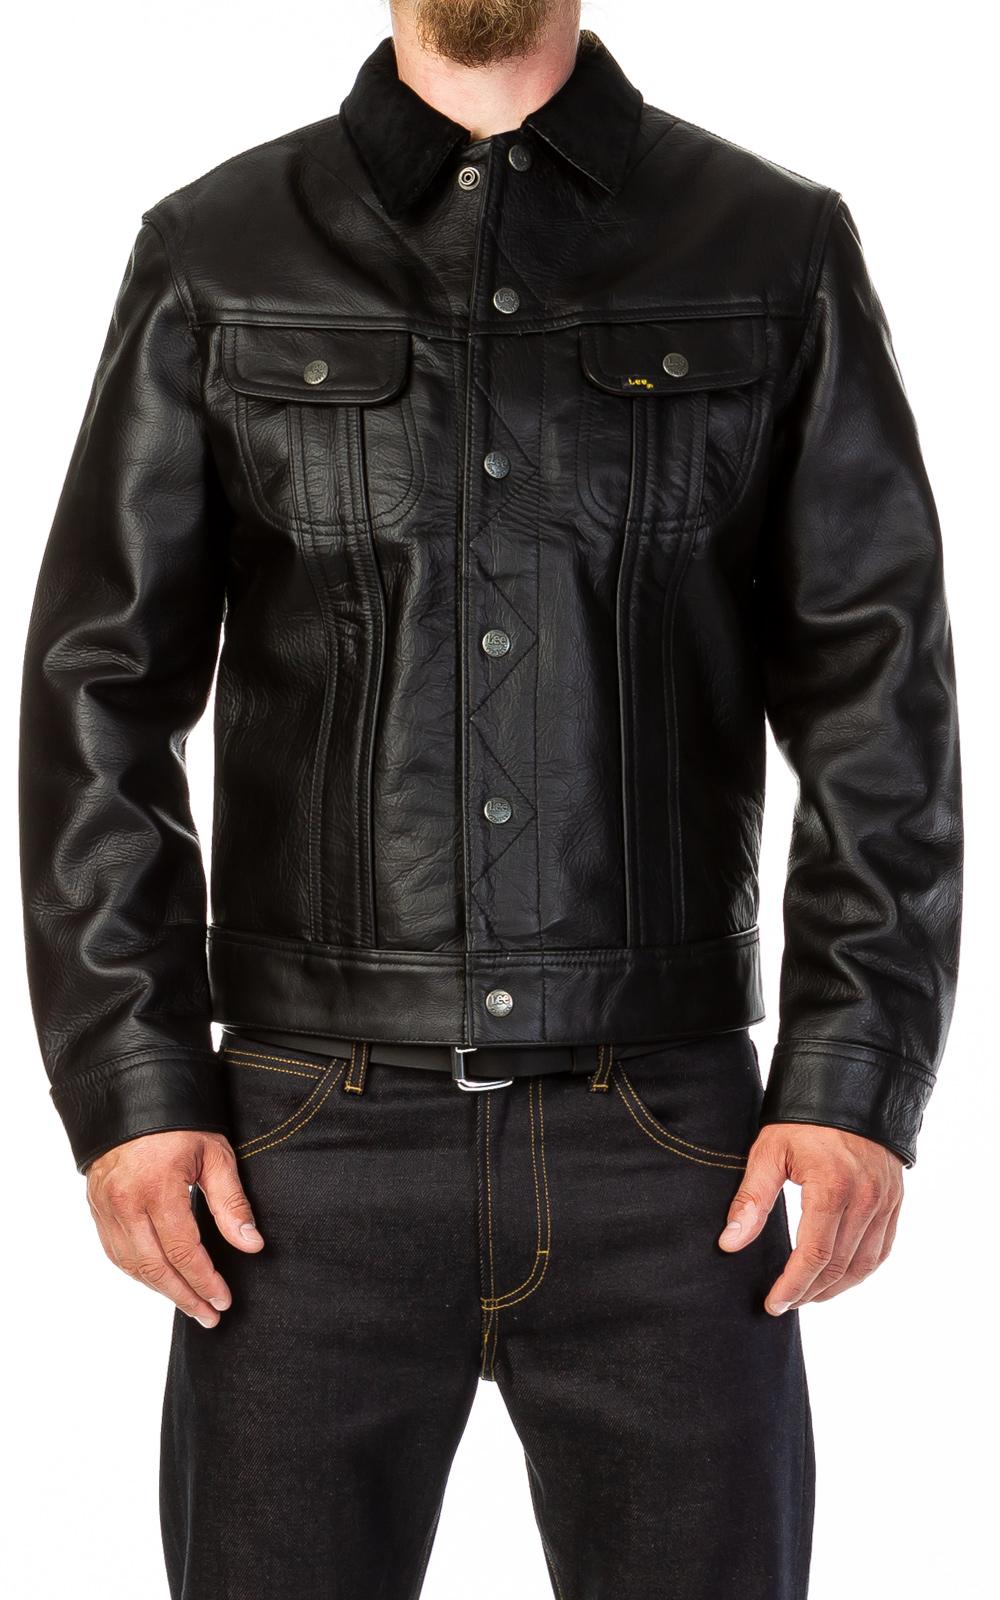 Lee 101 Leather Storm Rider Jacket Flash Sales - thewestgatemall.com  1692725064